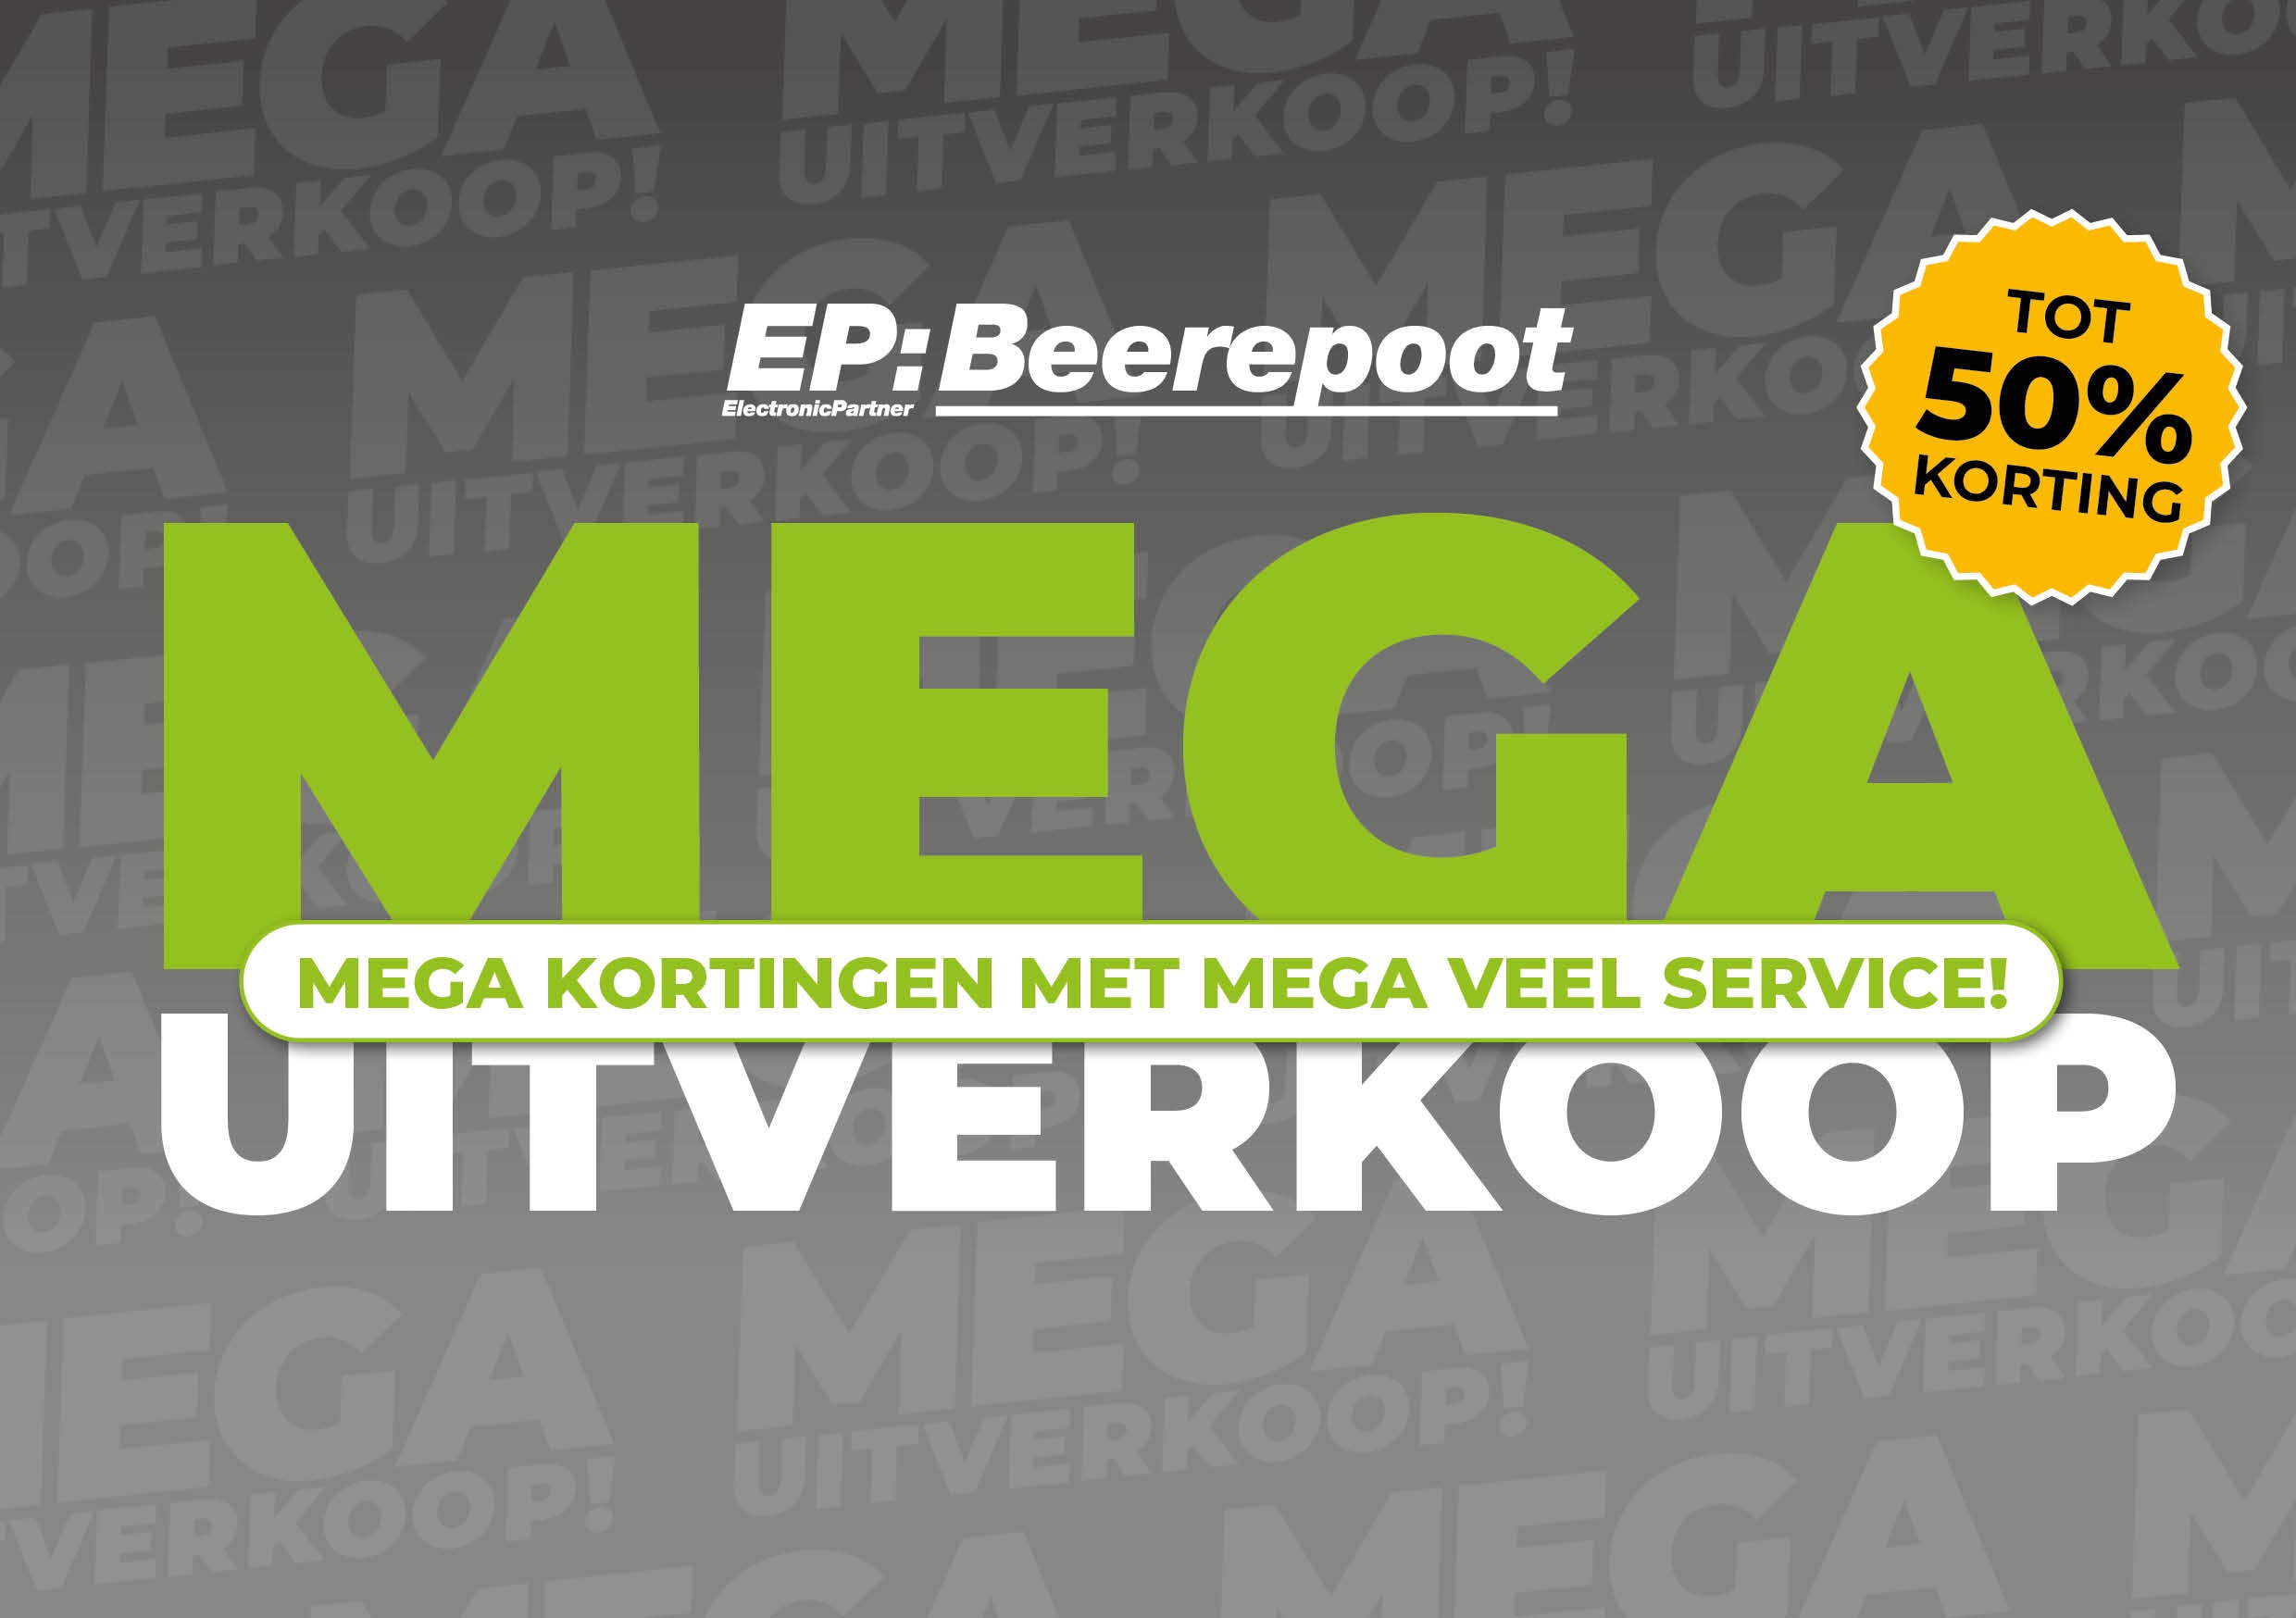 EP-Beerepoot; MEGA Uitverkoop.